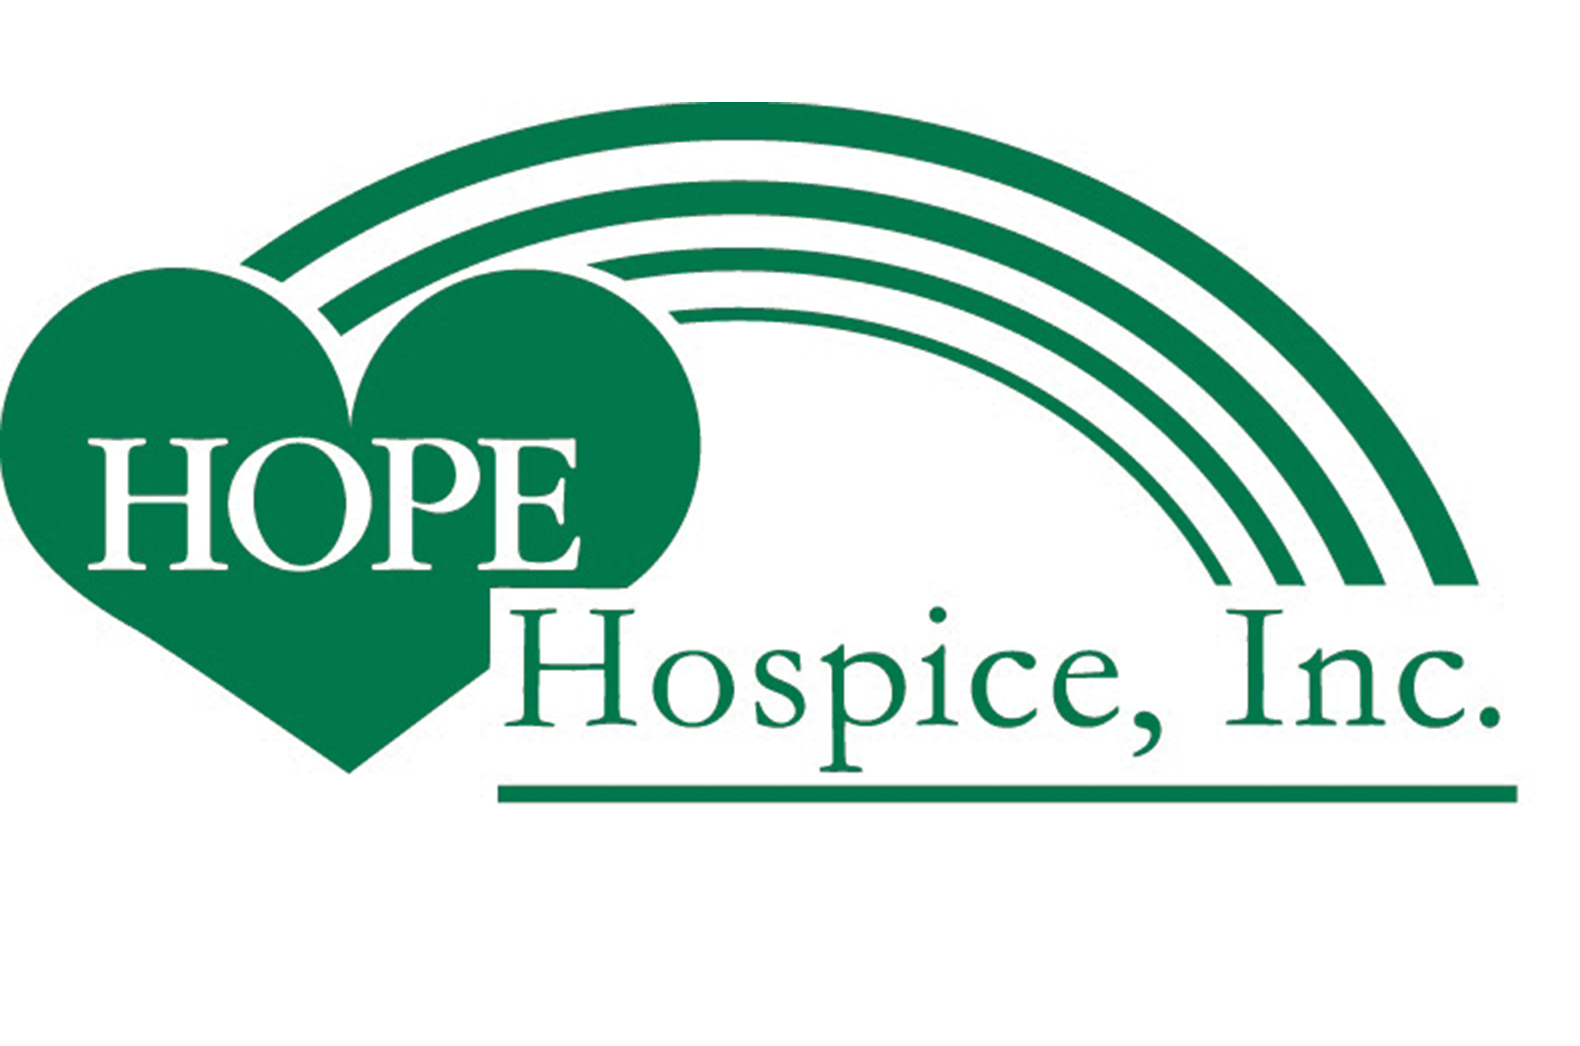 Hope Hospice